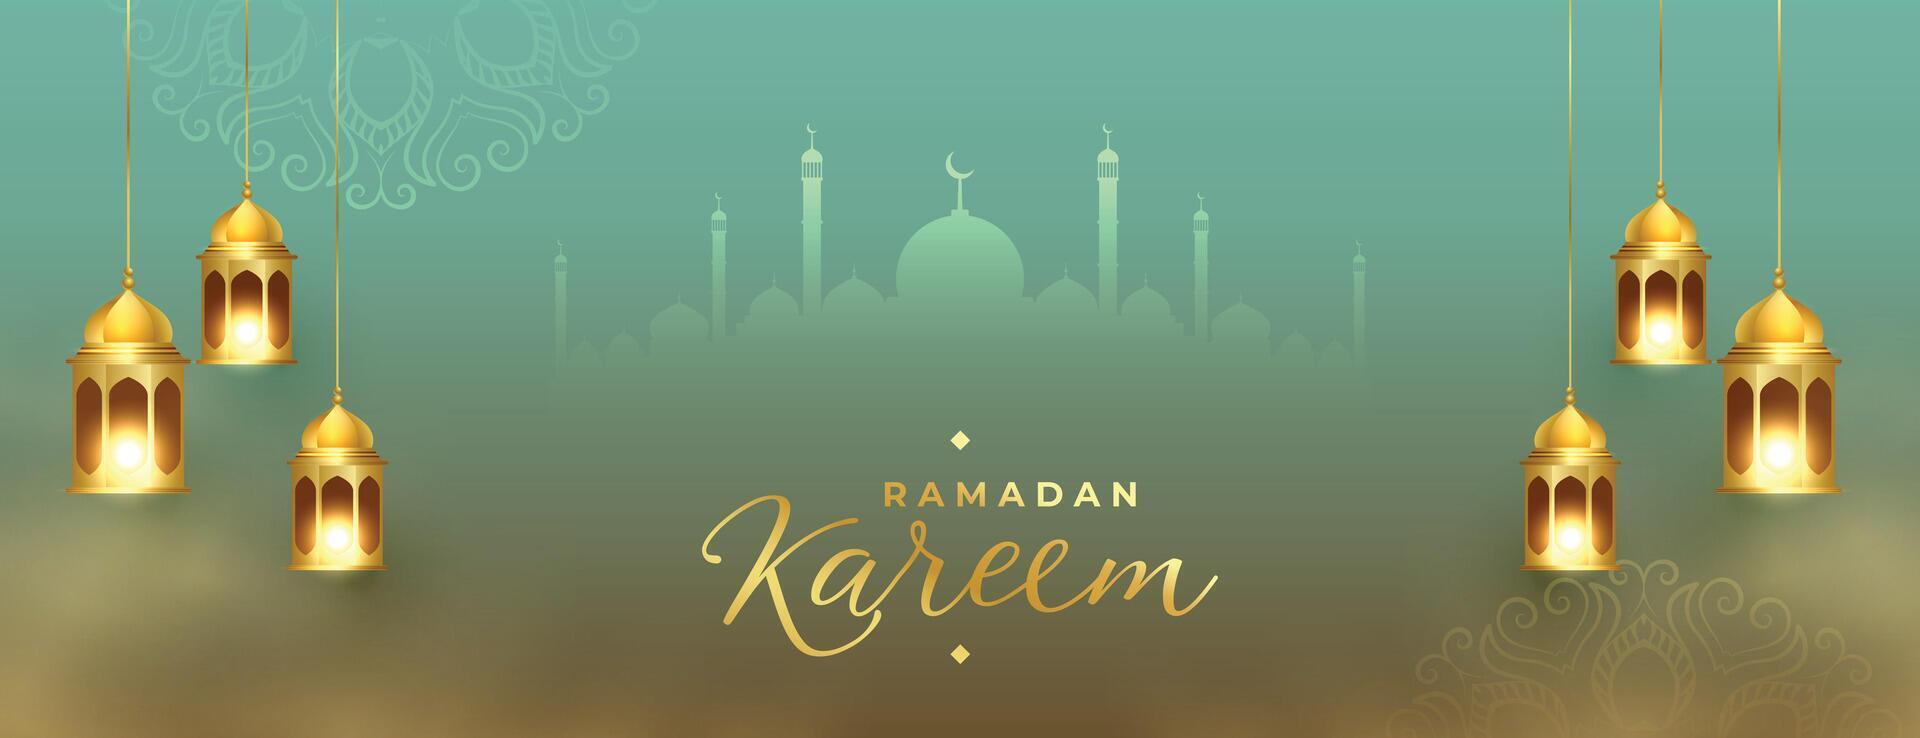 Ramadán kareem dorado linterna eid festival hermosa bandera diseño vector